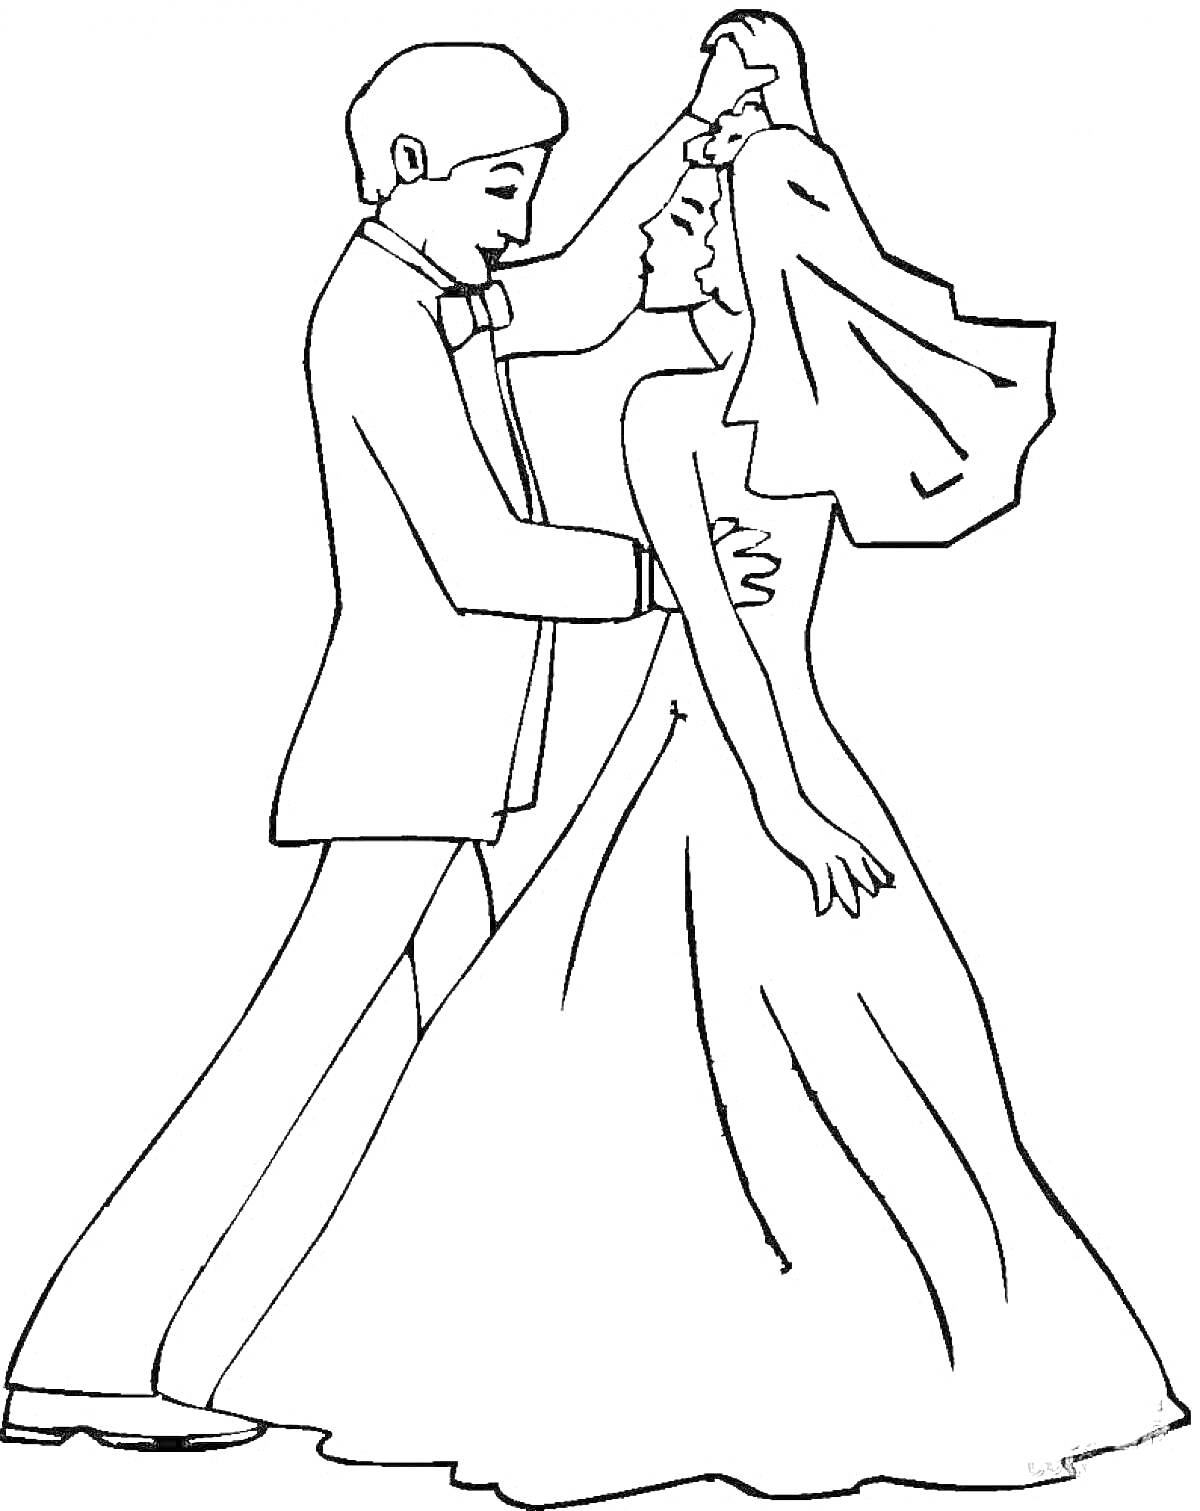 Жених и невеста танцуют на свадьбе